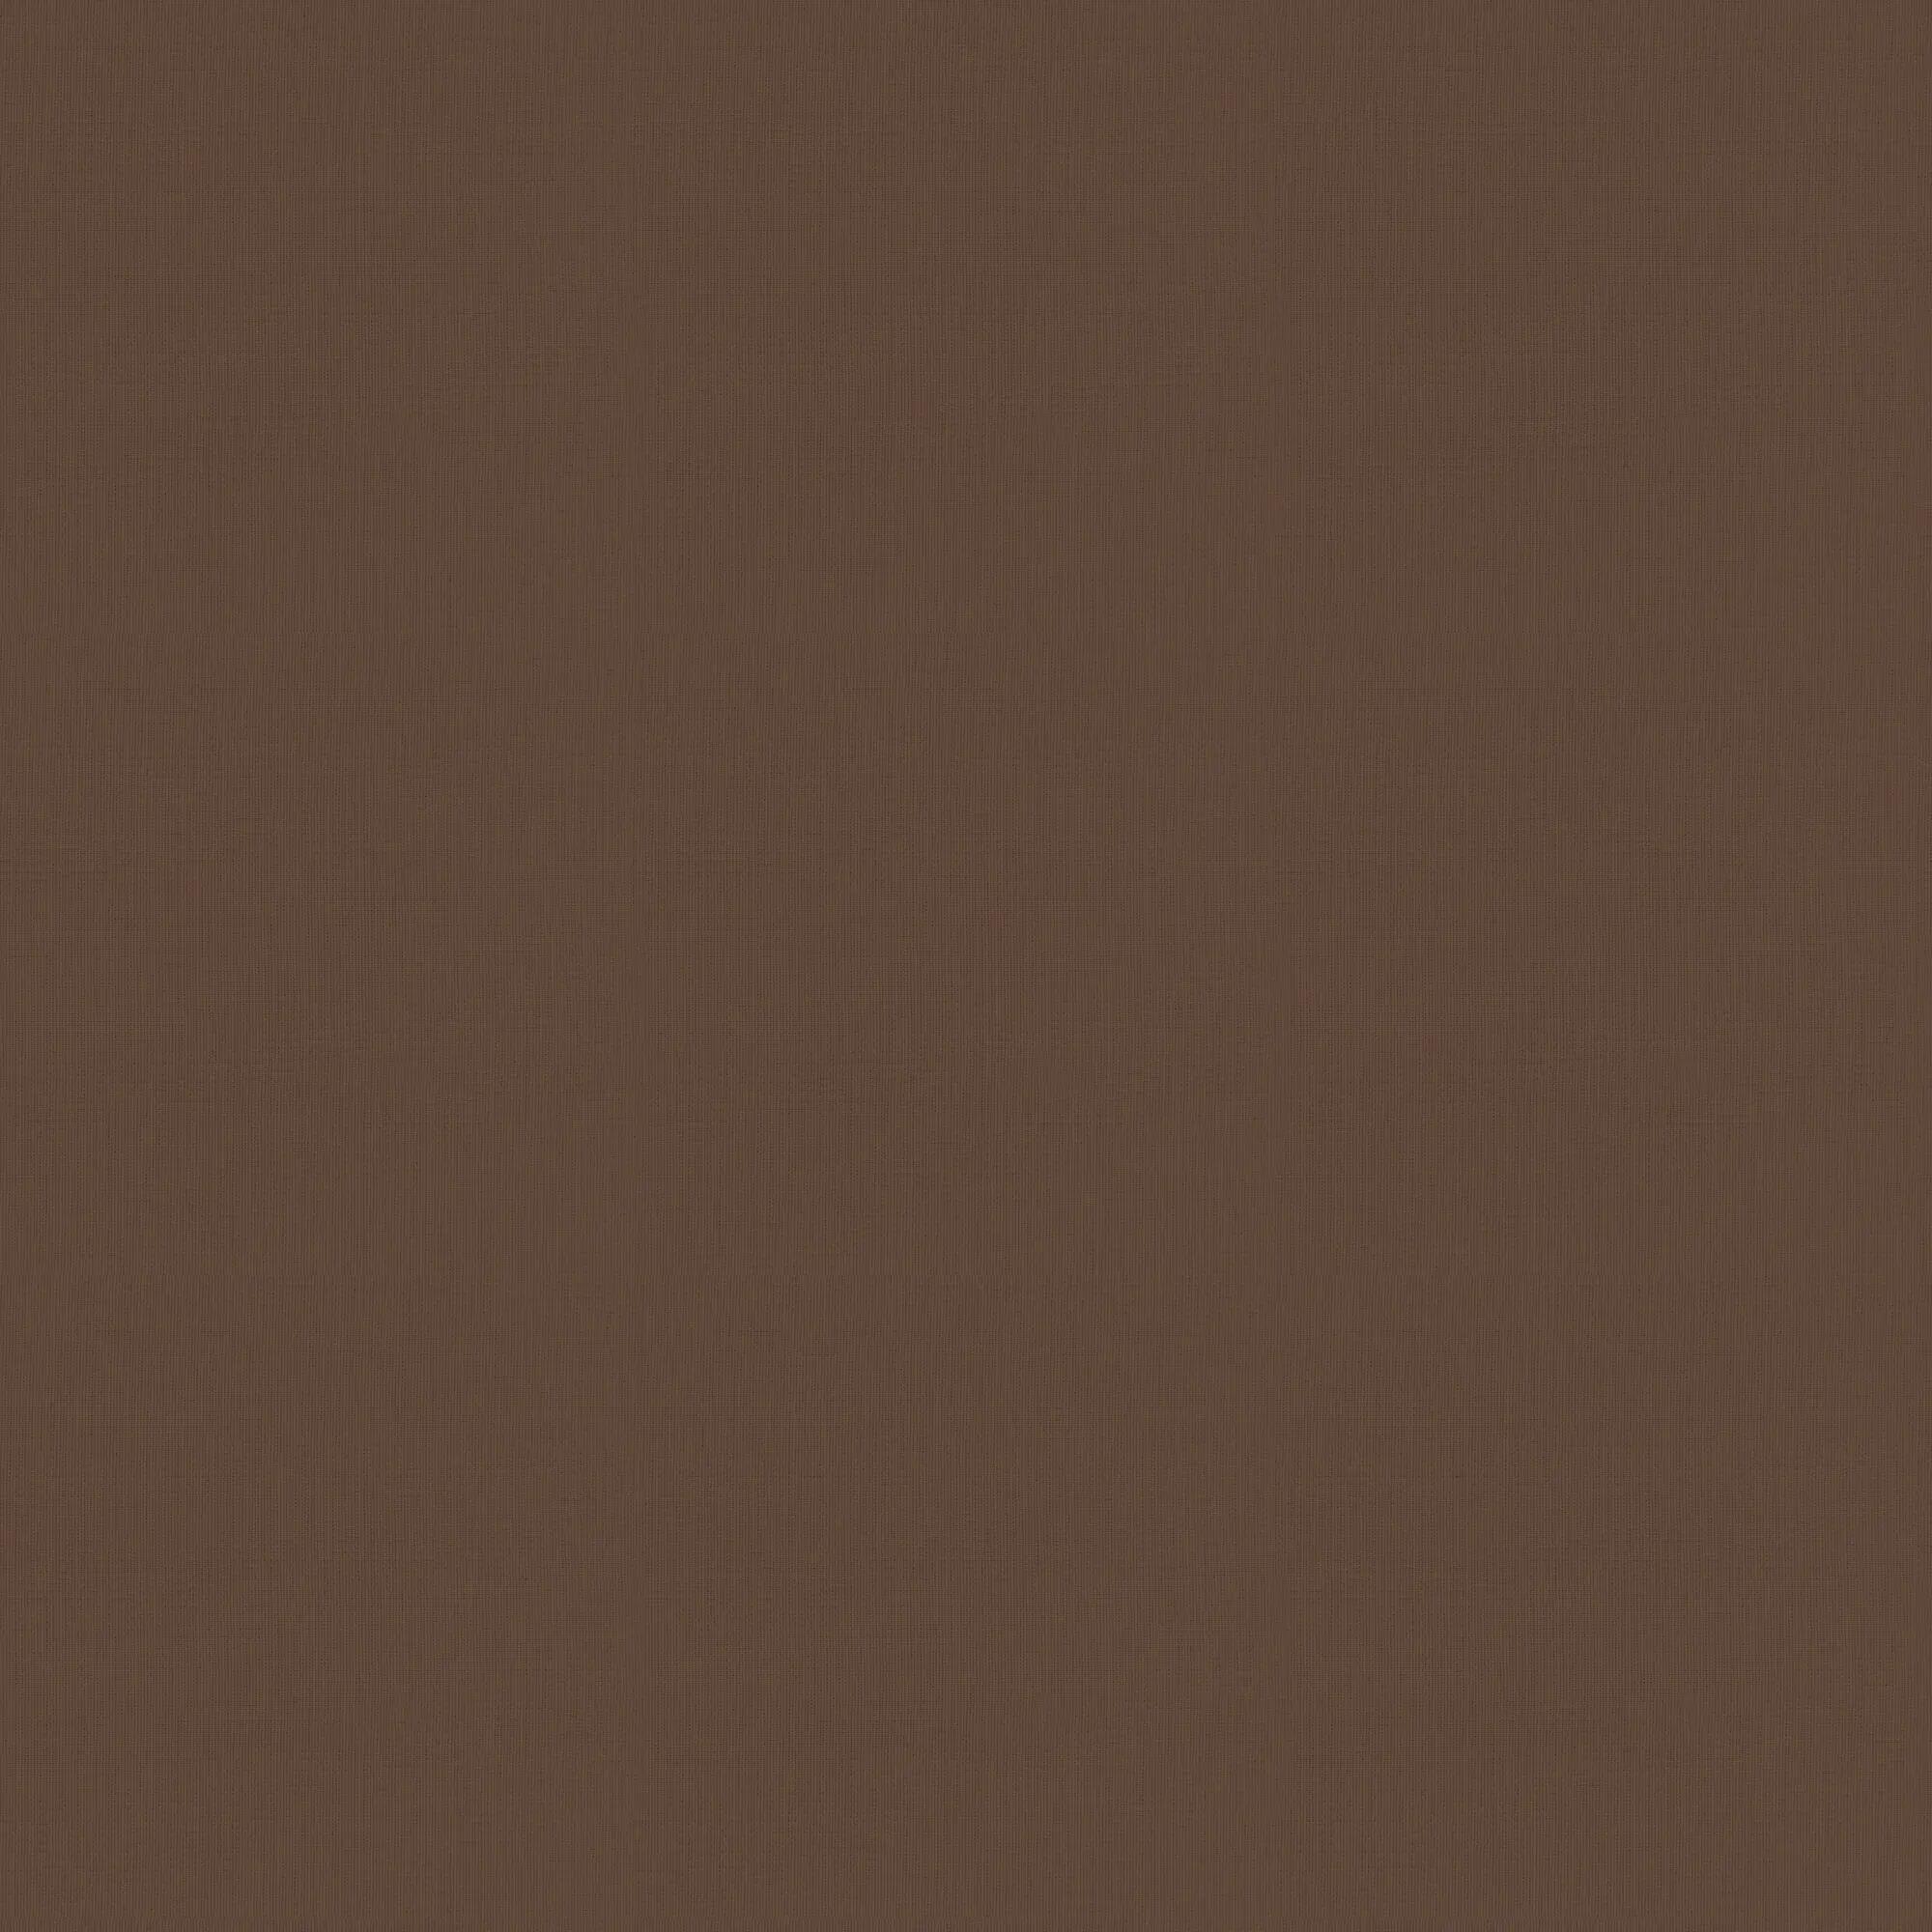 Tela al corte loneta camelia chocolate ancho 280 cm